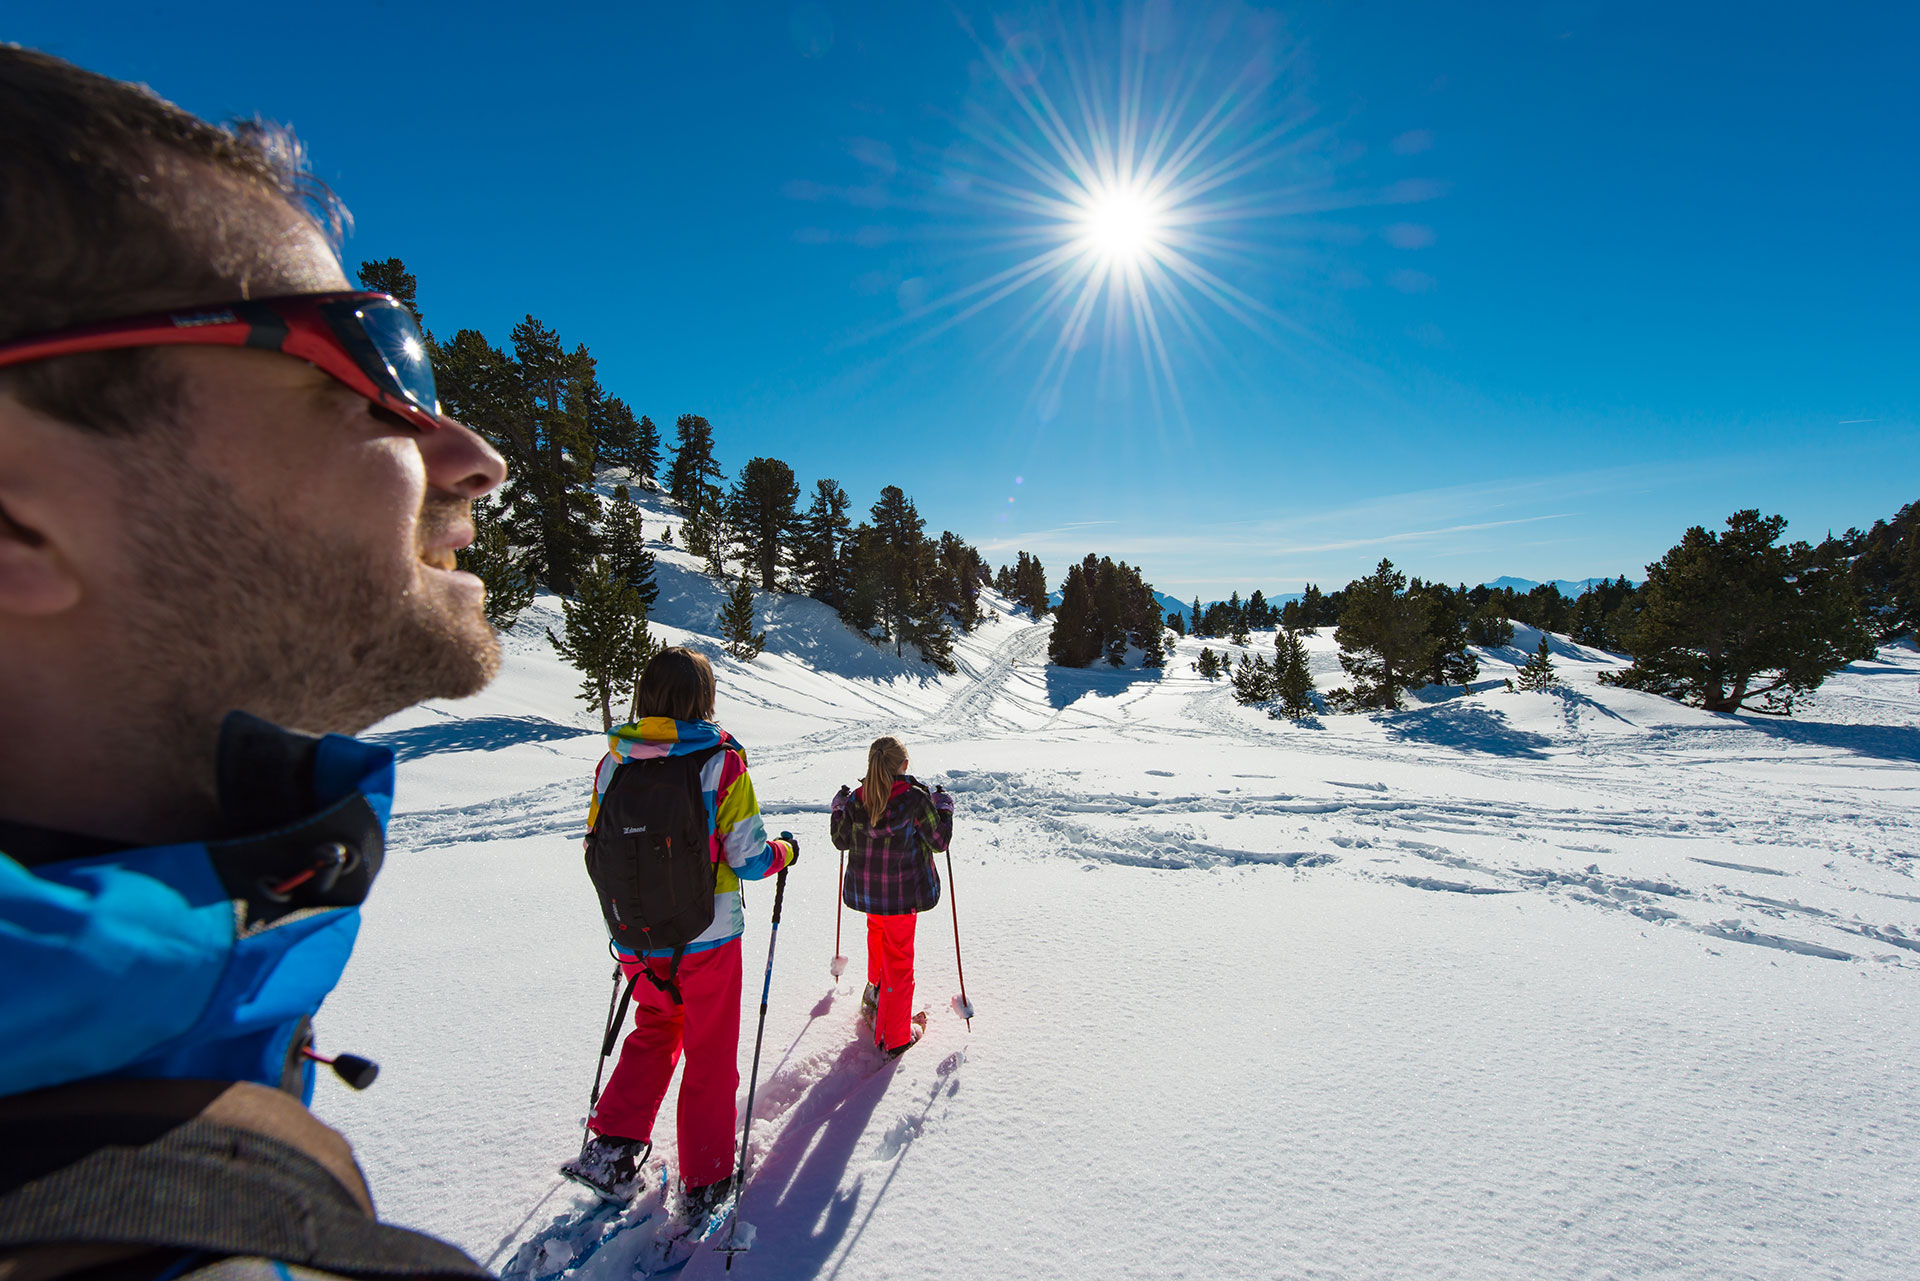 Chamrousse activité famille hiver station ski montagne grenoble isère alpes france - © Images-et-reves.fr